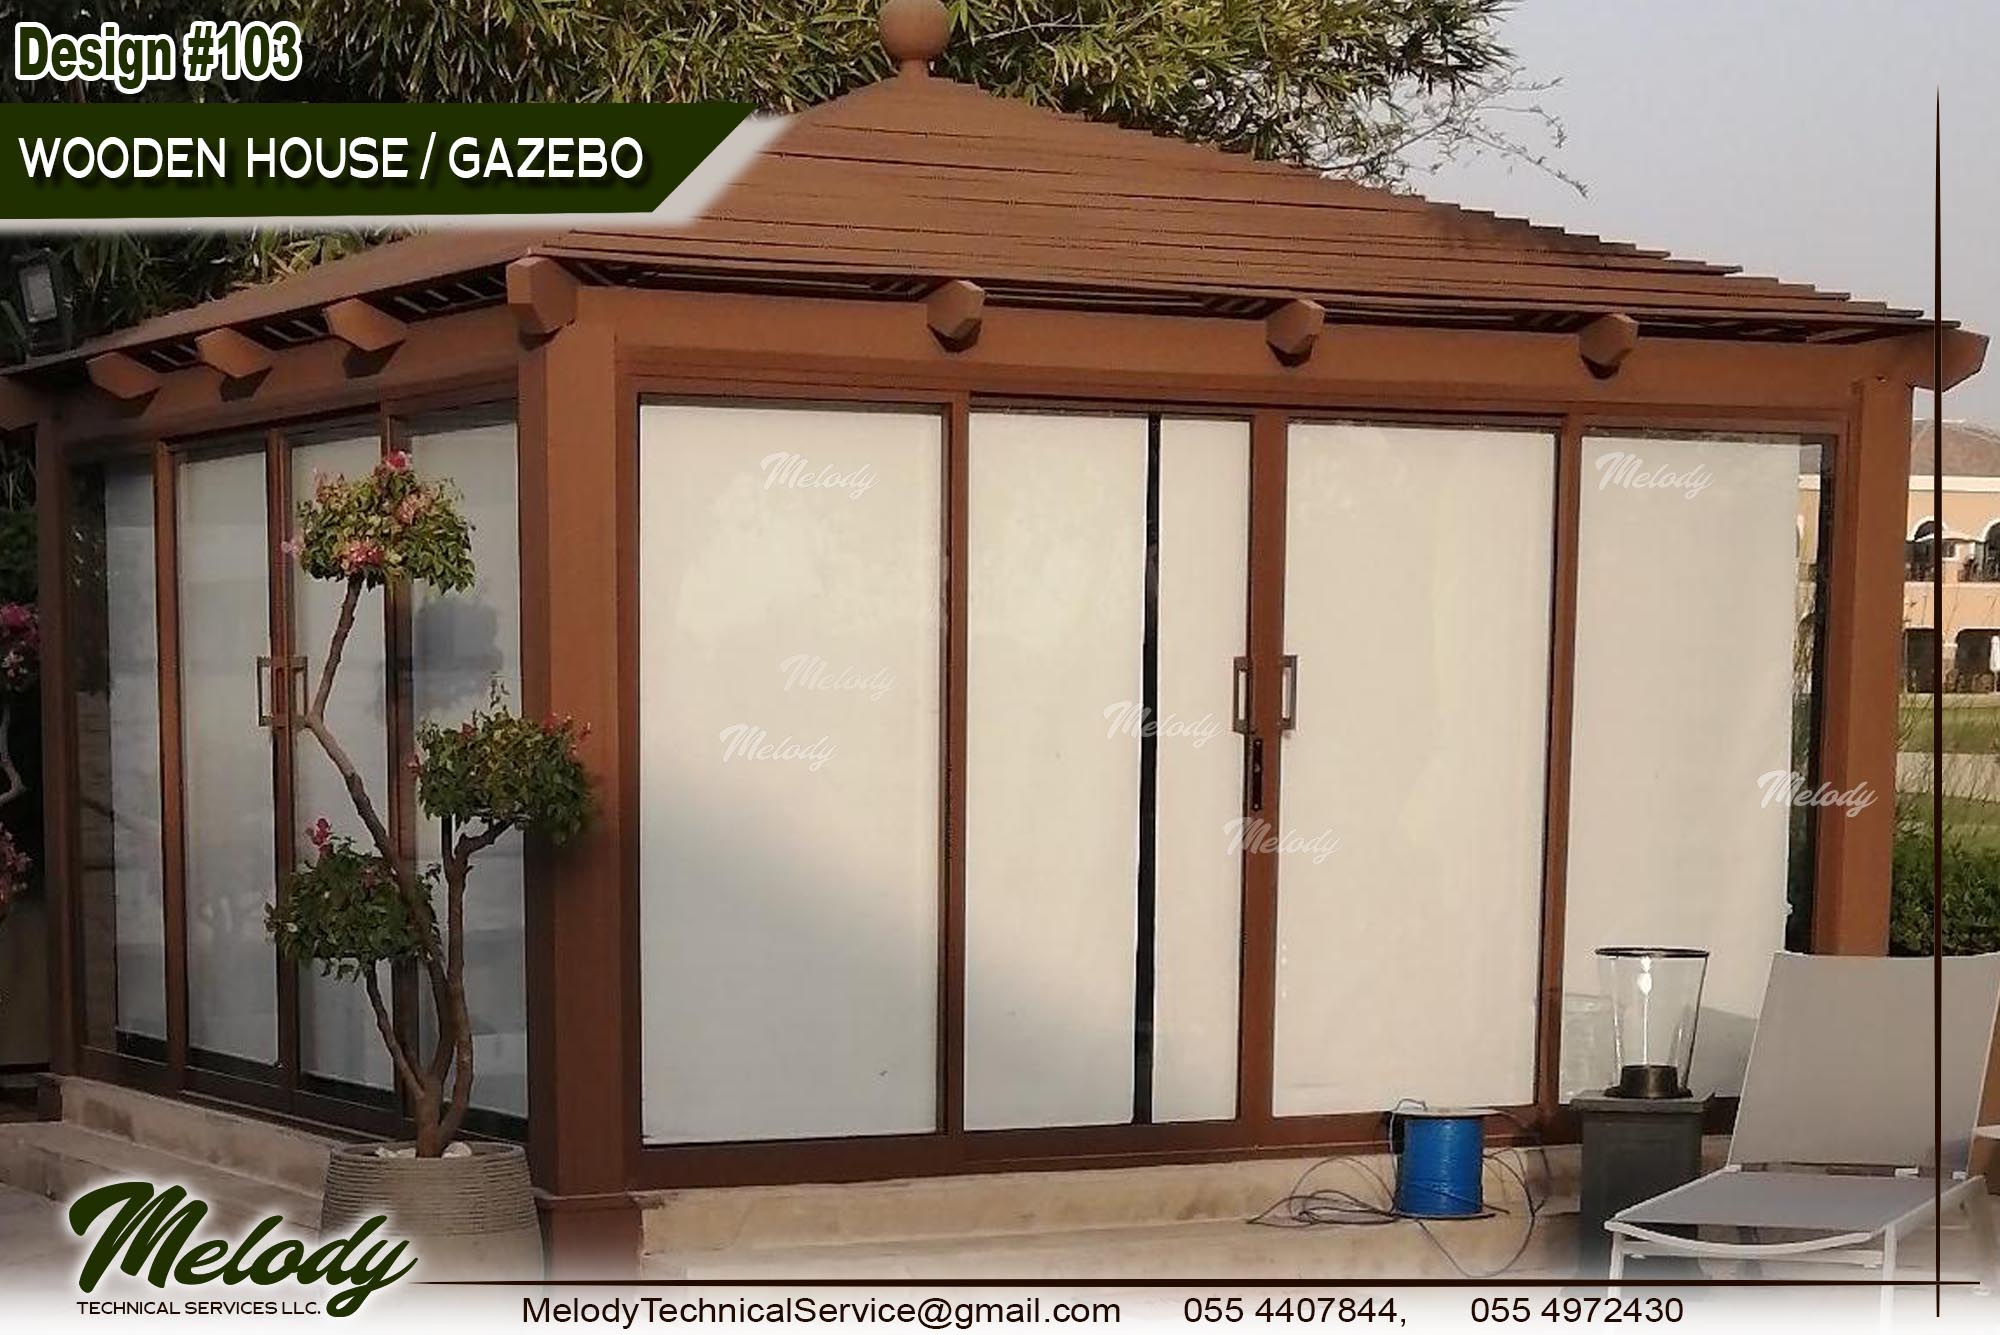 Garden Gazebo Manufacturer in Dubai, Wooden Gazebo Suppliers (9).jpg